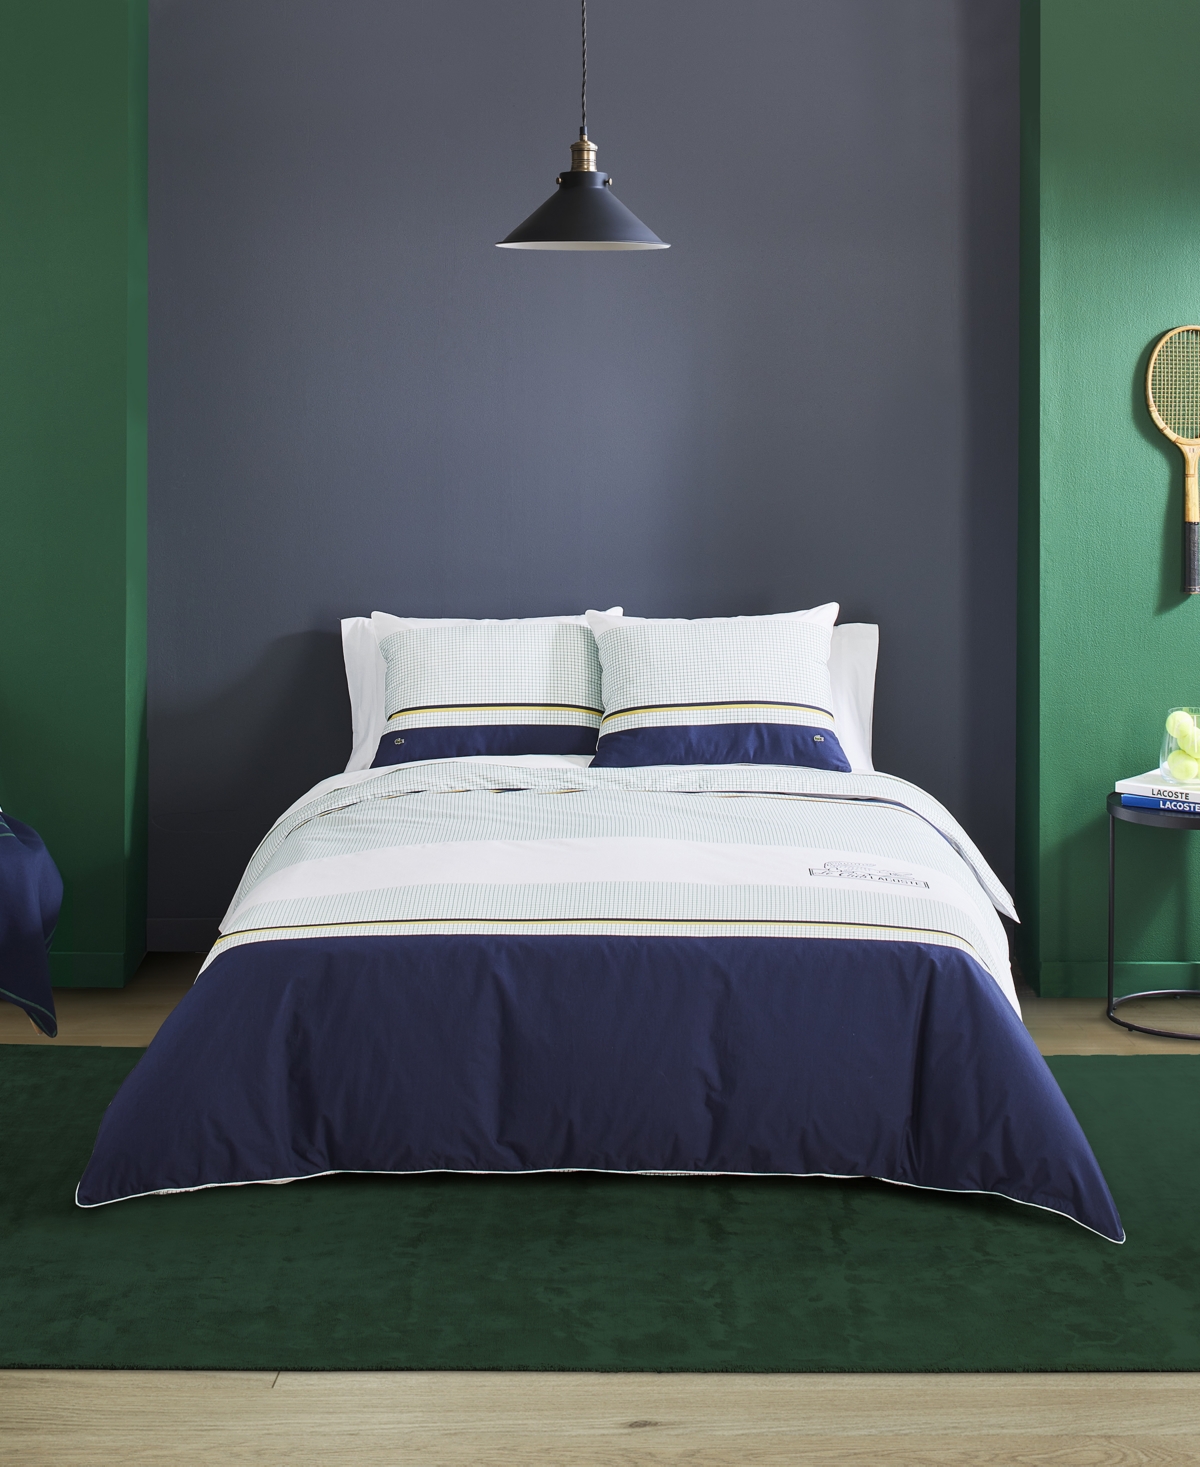 Lacoste Home Valleyfield Comforter Set, Full/queen In Green